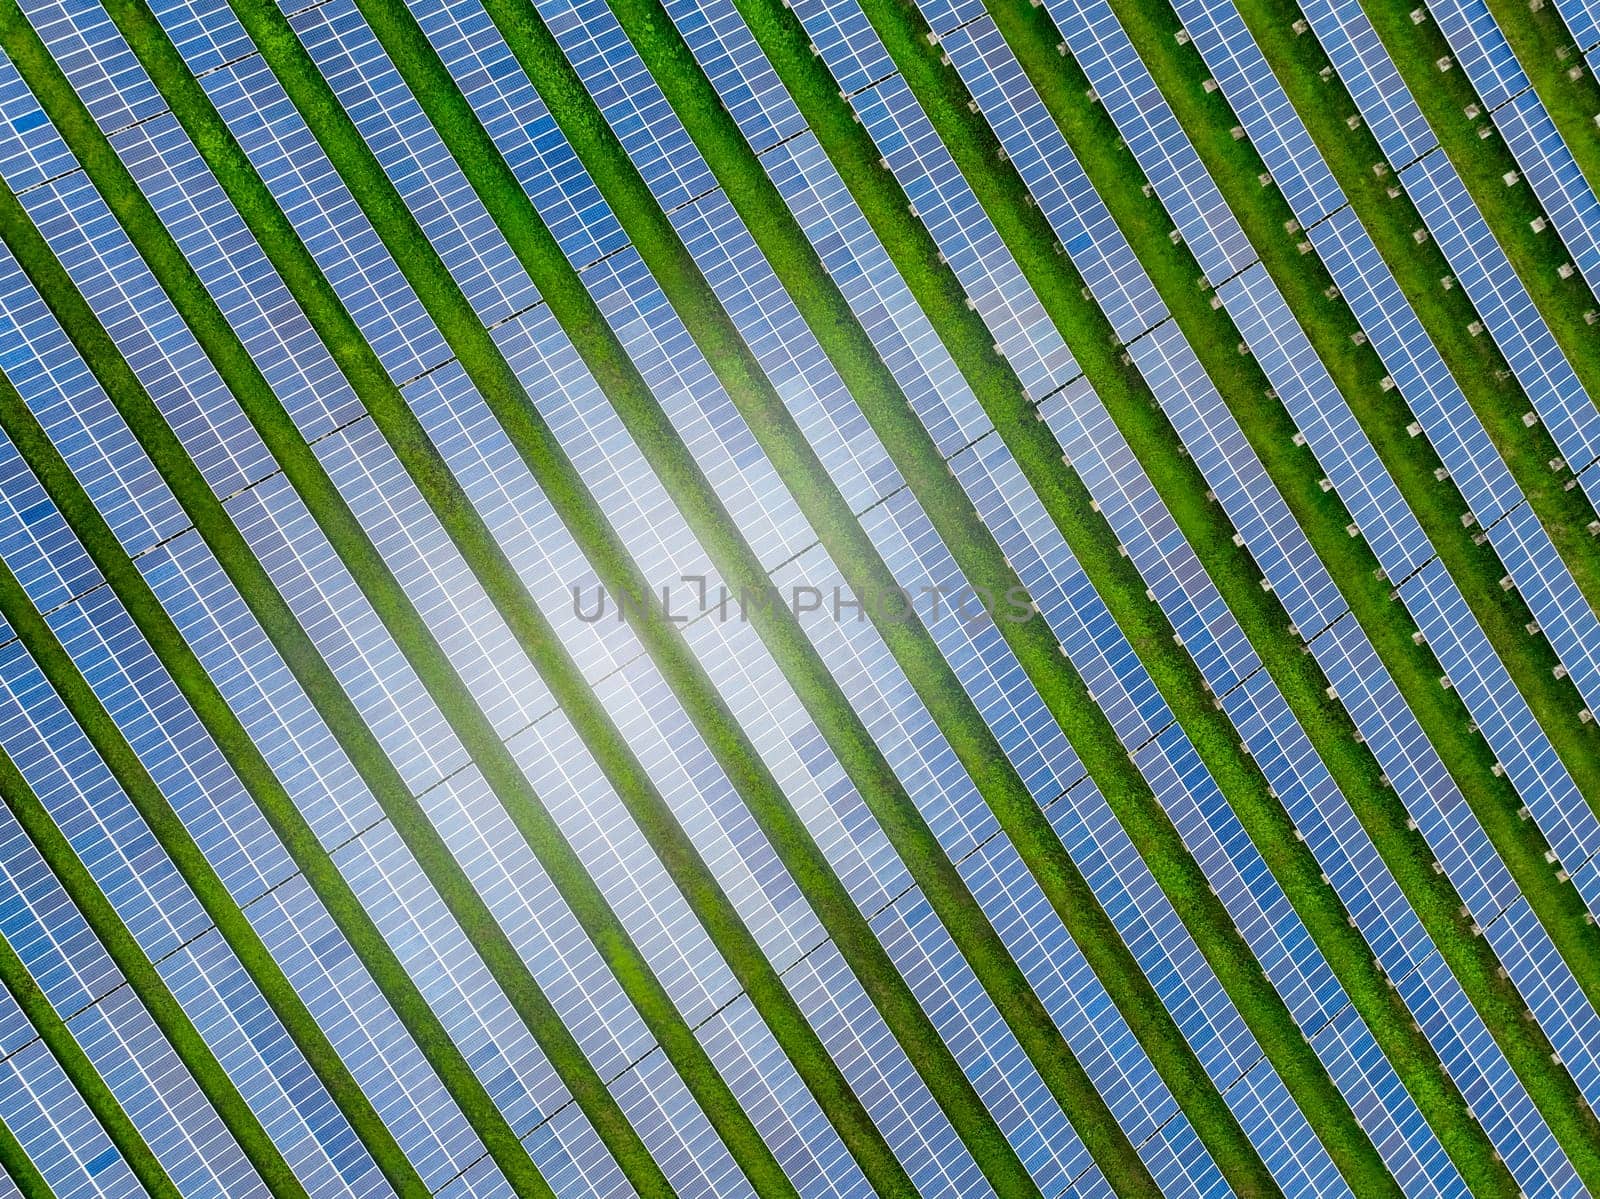 Solar farm and sun light. Solar power for green energy. Sustainable renewable energy. Photovoltaic power station or solar park. Solar panel installation and maintenance concept. Energy sustainability.